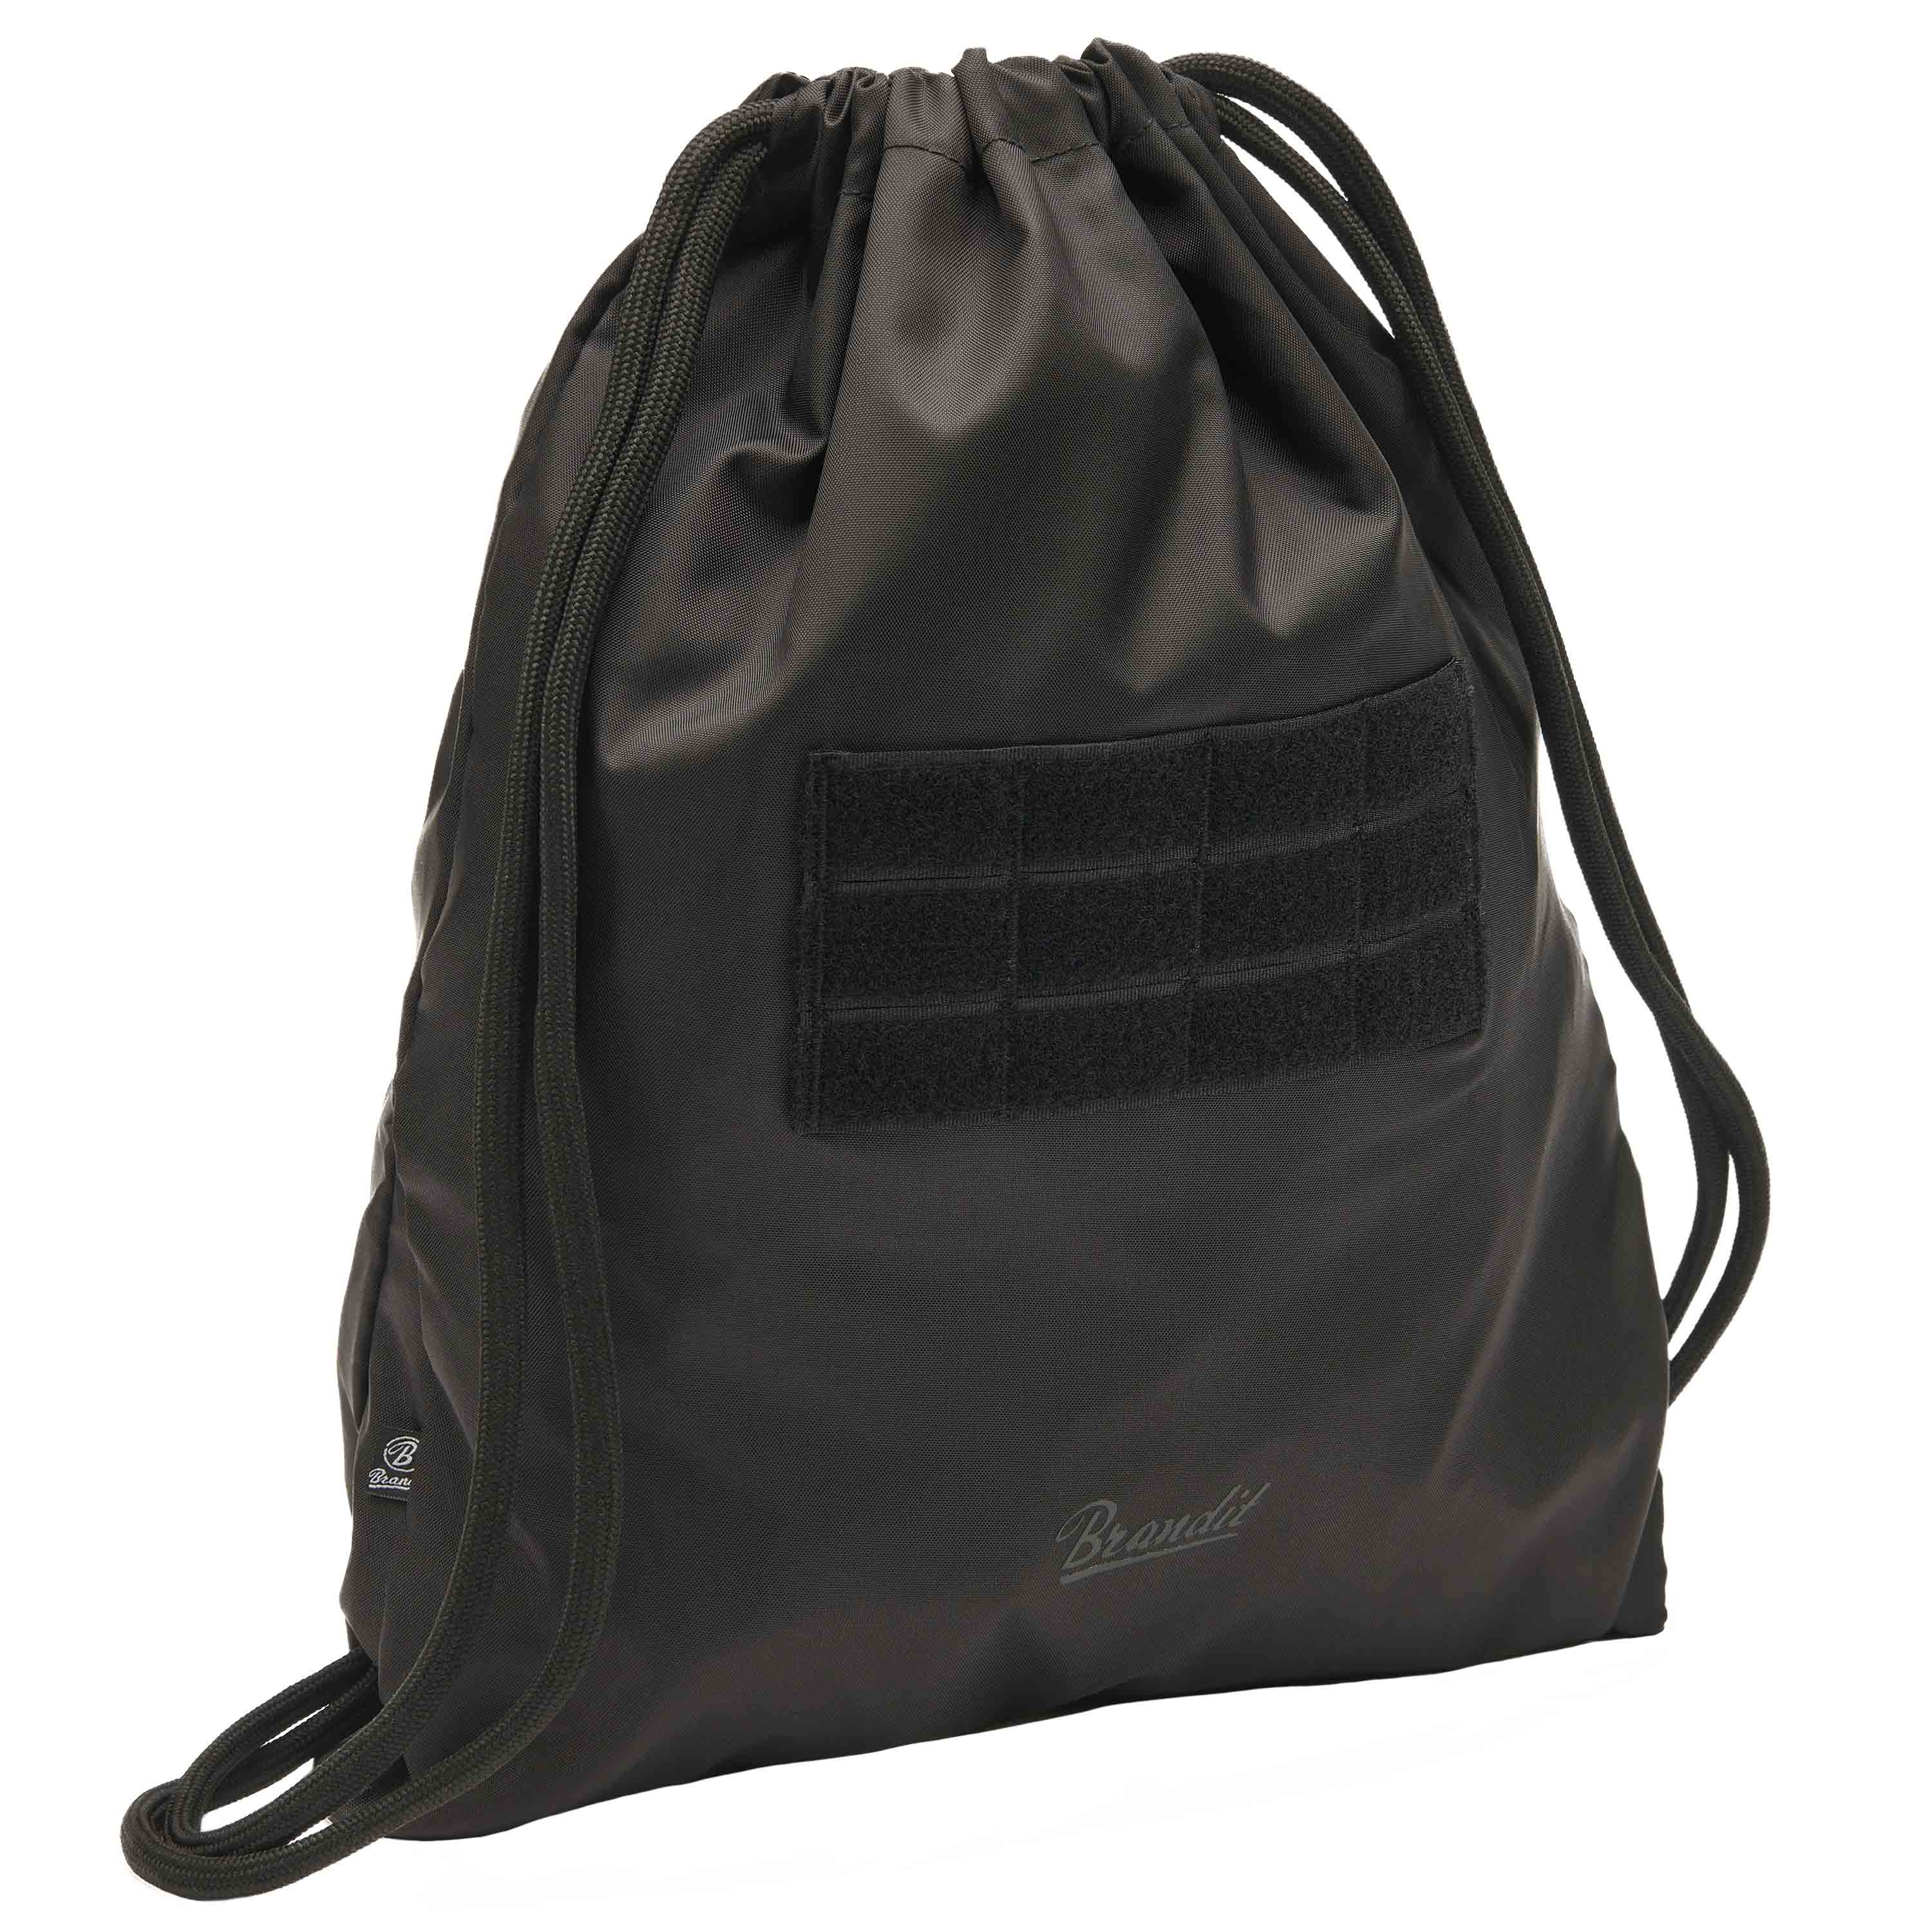 Purchase the Brandit US Cooper Gym Bag black by ASMC